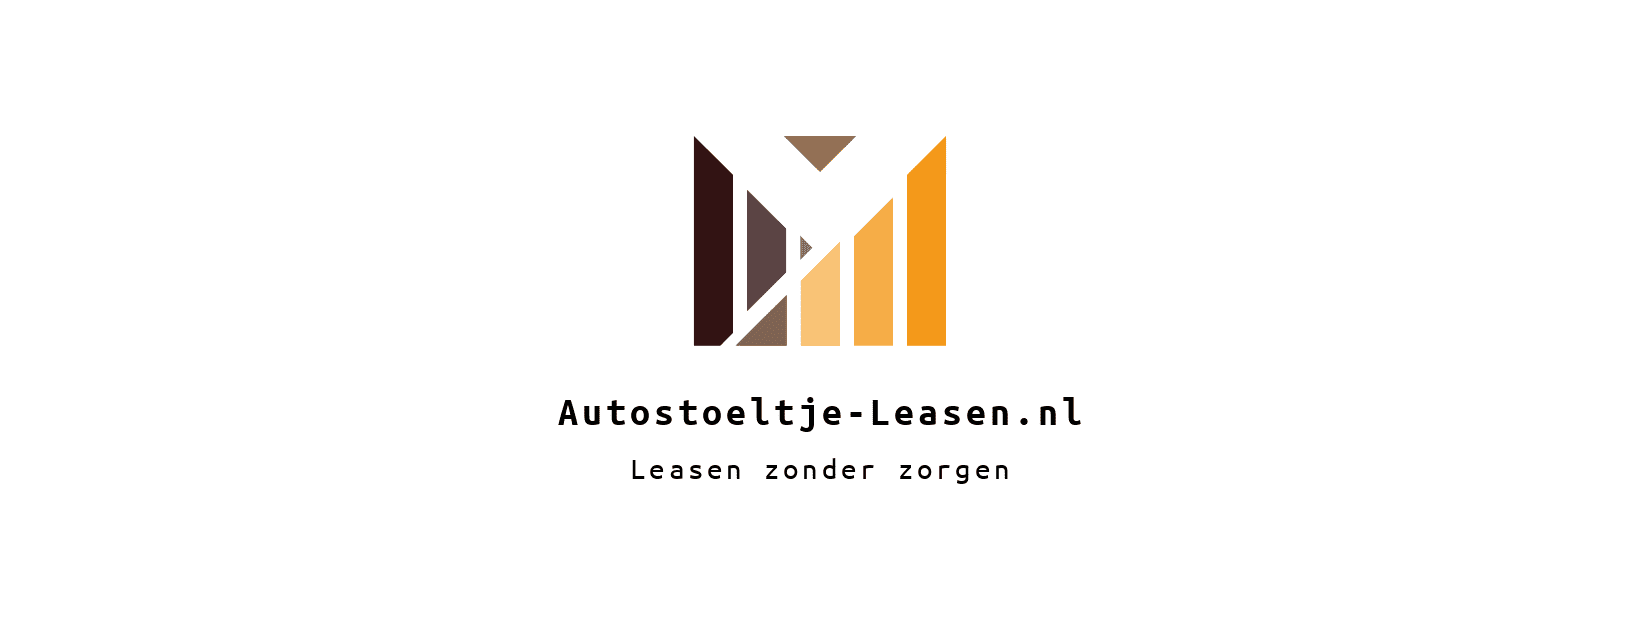 autostoeltje-leasen.nl